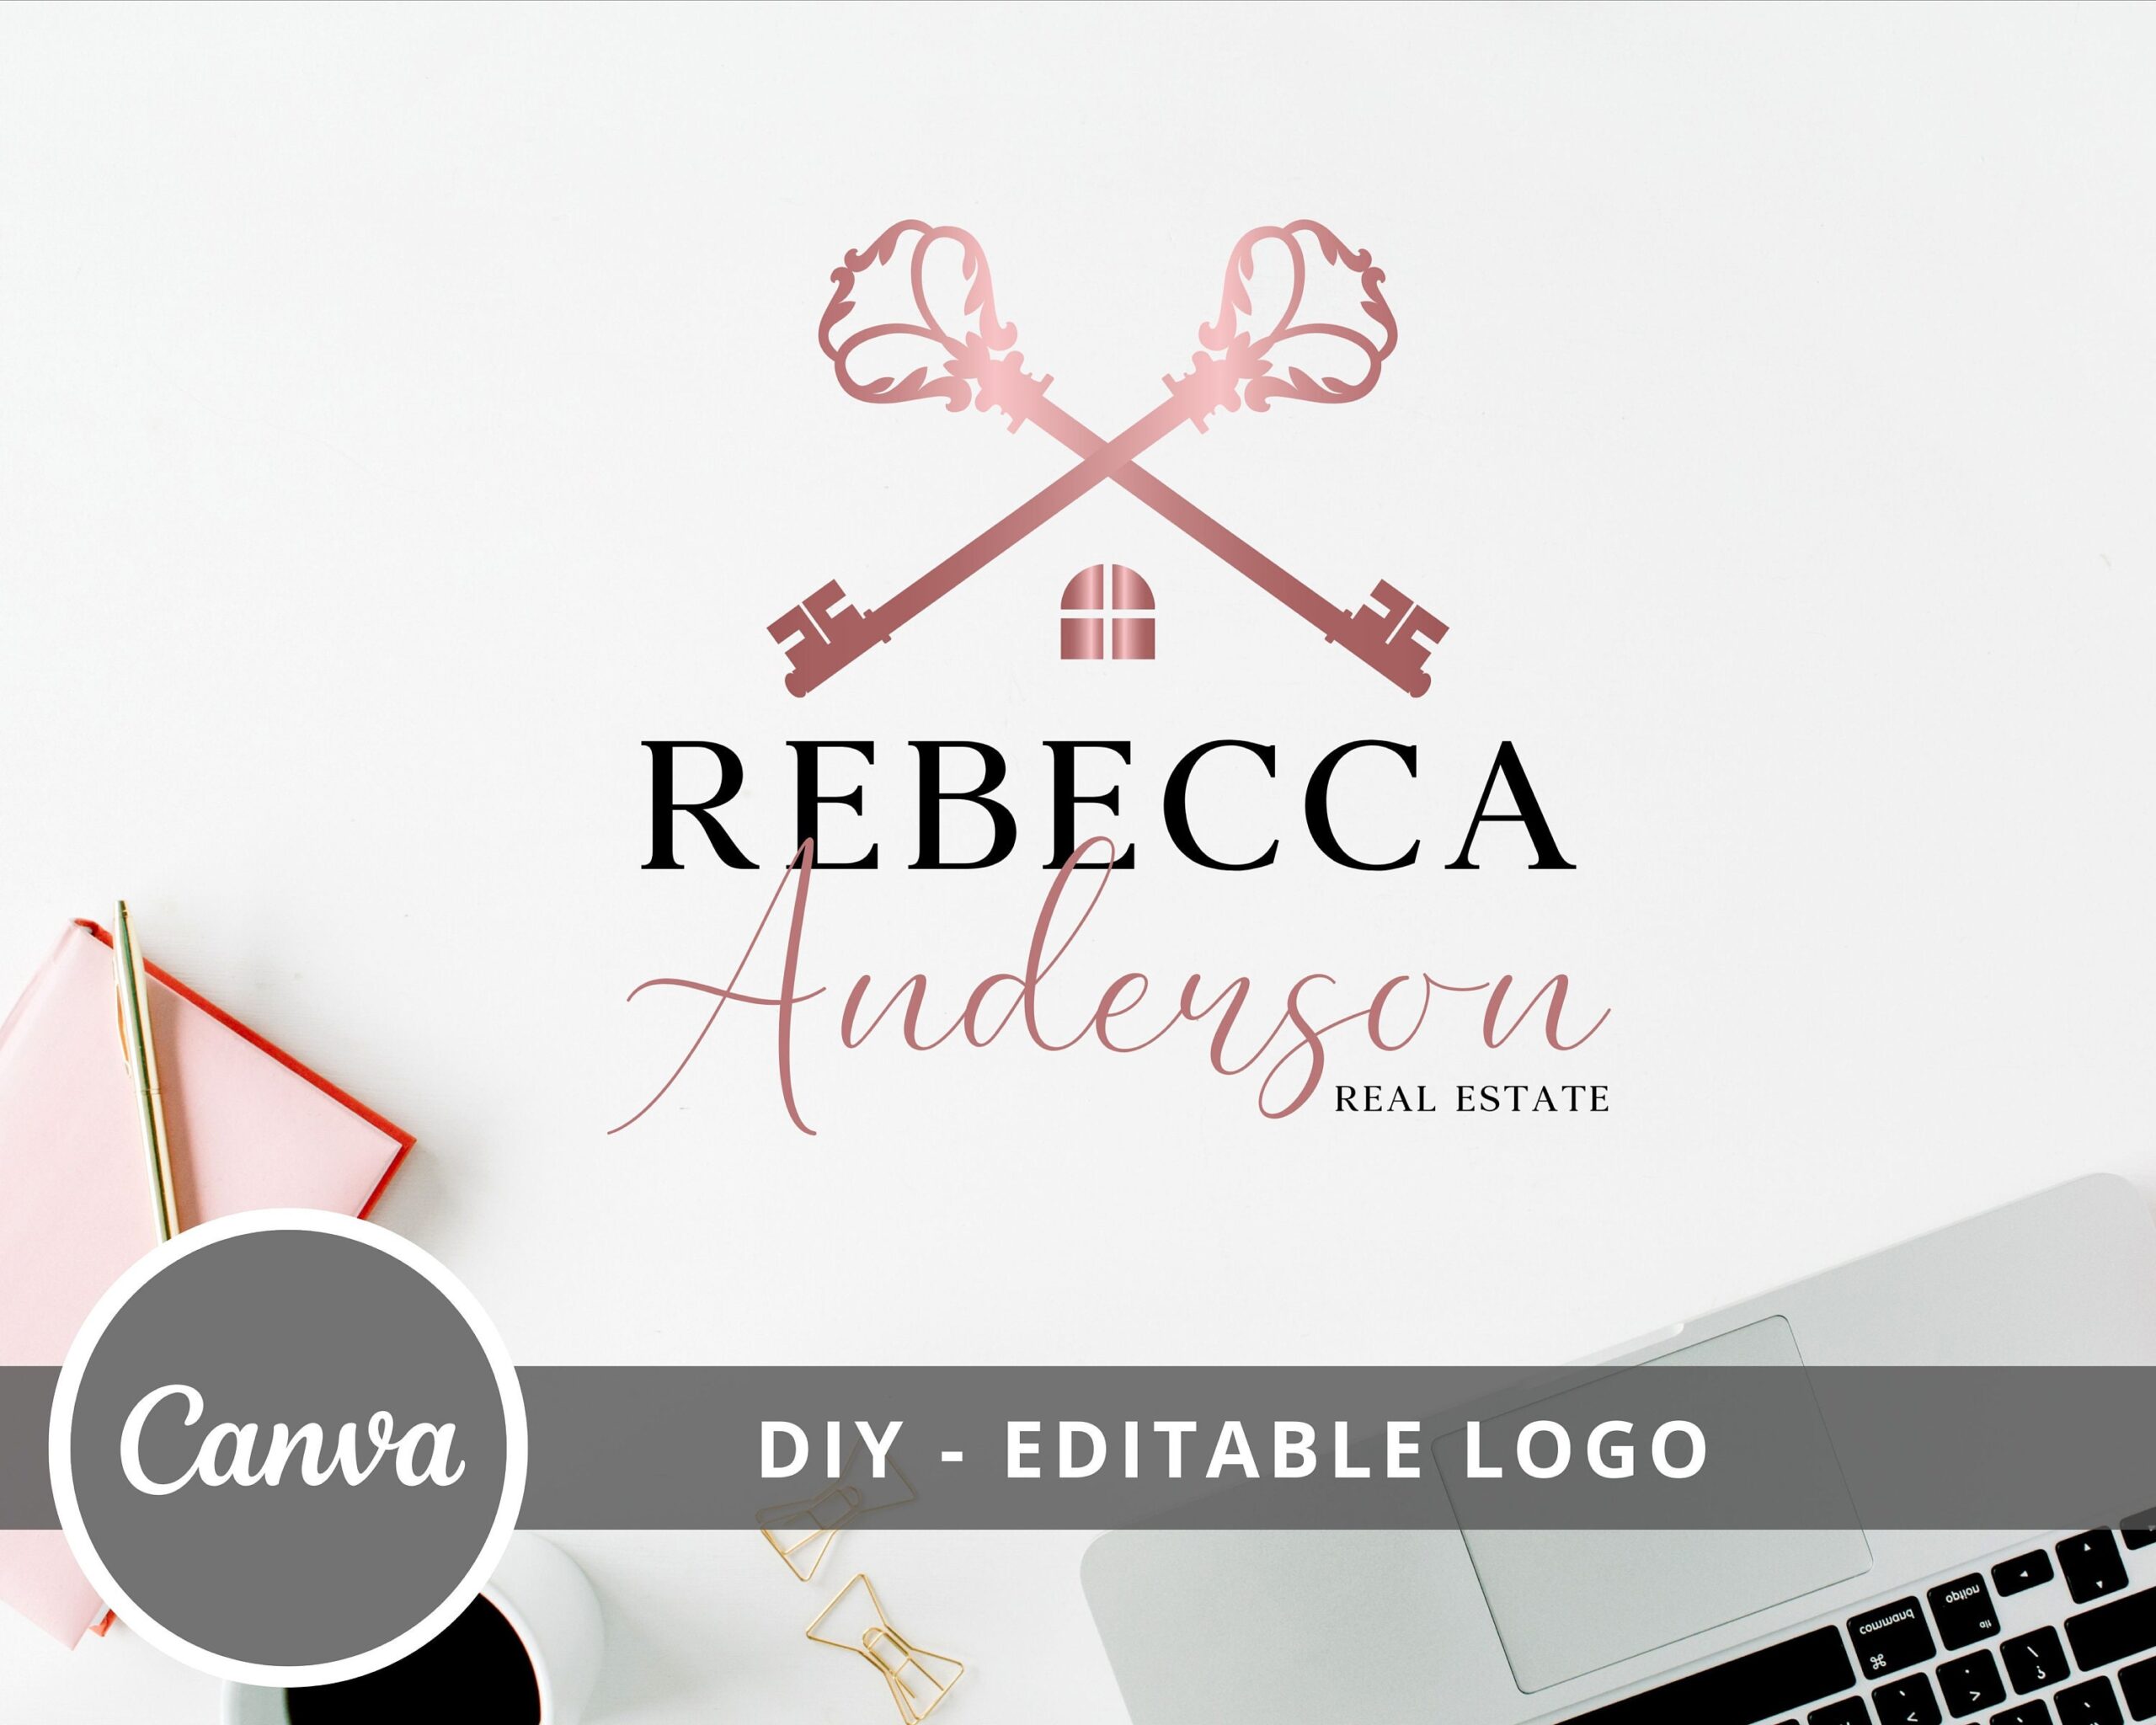 DIY Editable Real Estate Rose Gold Logo Design, Editable Template for Real Estate Agents, Canva Logo, Instant Access, Edit & Download